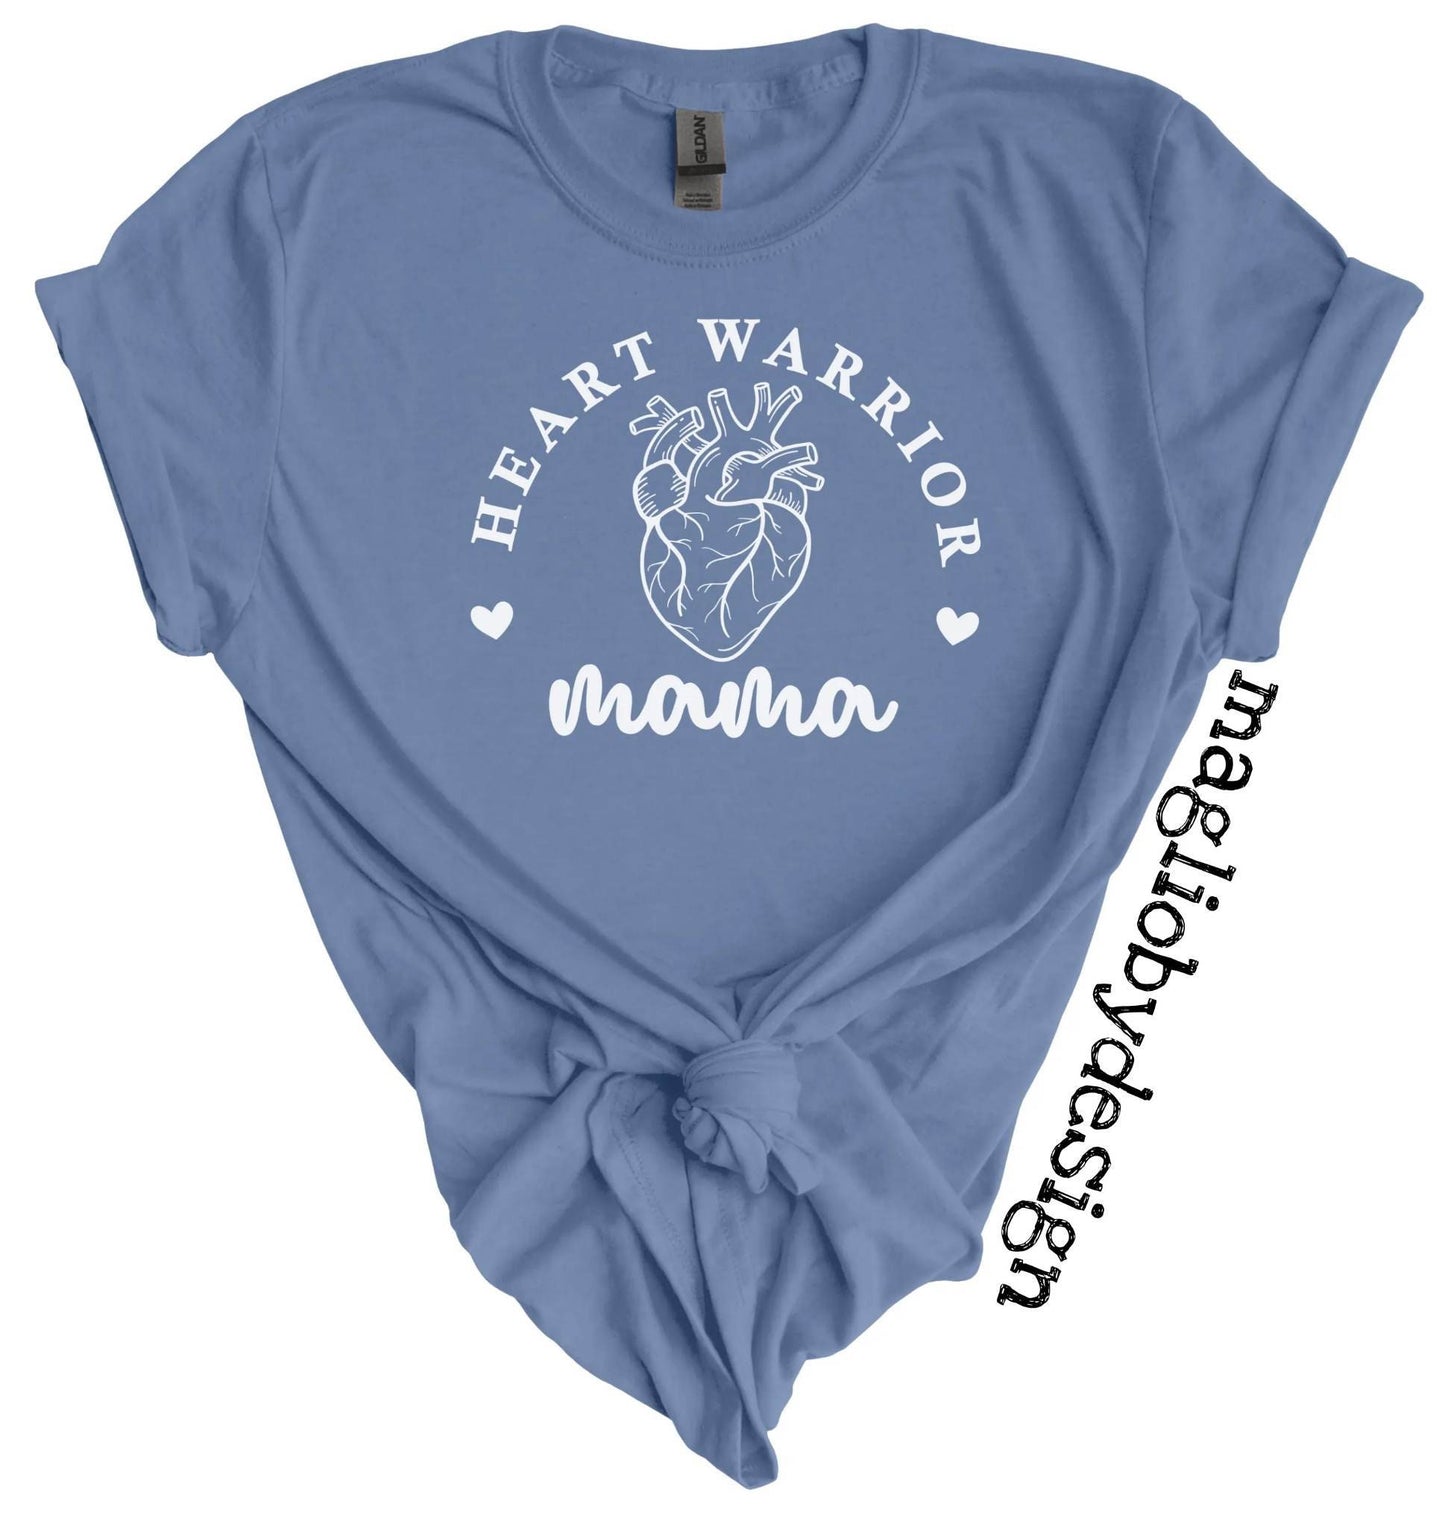 Heart warrior mama tshirt | Heart warrior mama anatomical heart tshirt | Heart mama gear | CHD awareness tshirt